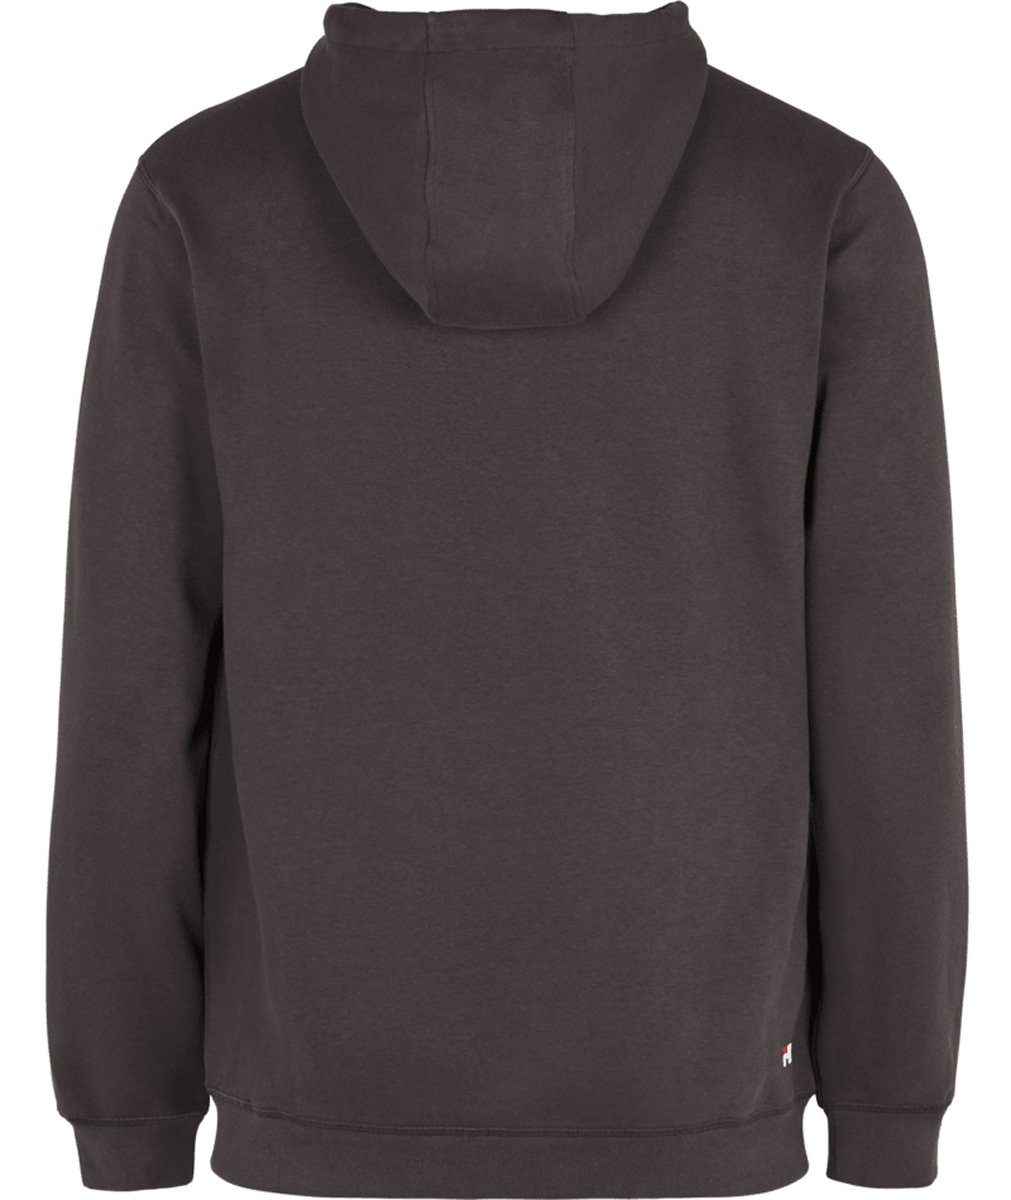 BARUMINI Hoodie Dunkelgrau Sweatshirt Sweater hoody, Fila Unisex -